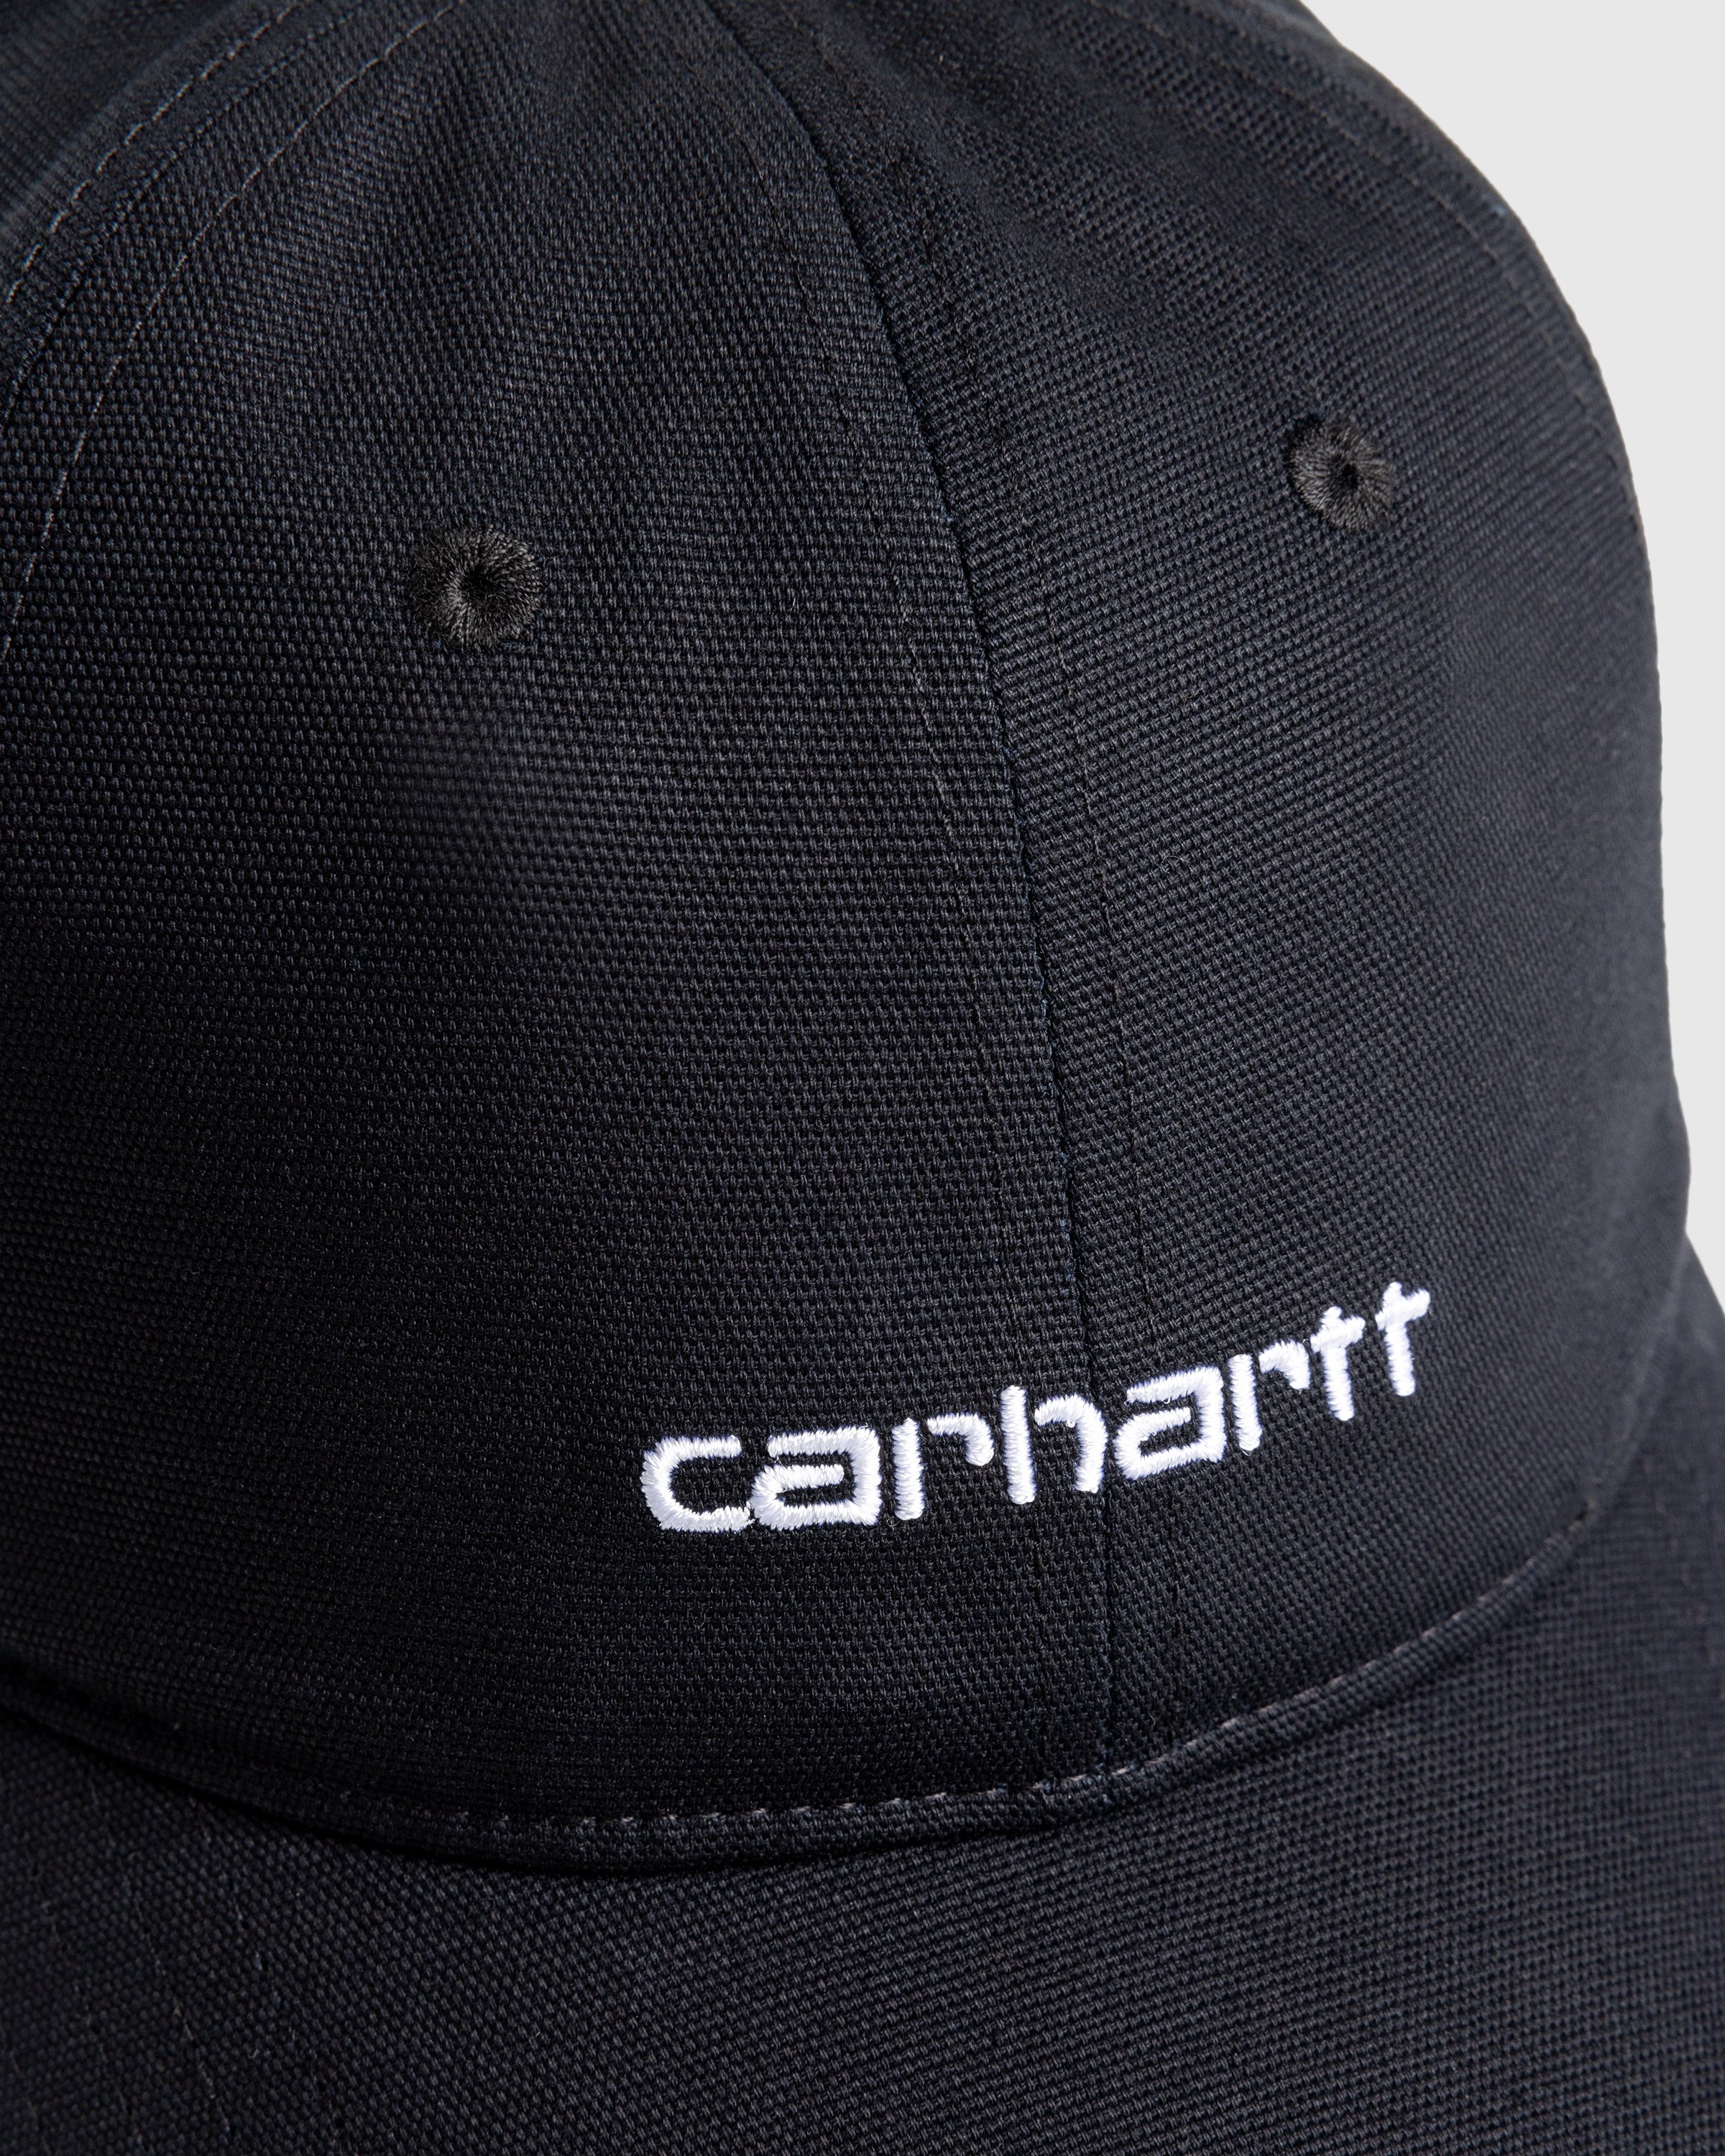 Carhartt WIP - Canvas Script Cap Black / White - Accessories - Black - Image 5